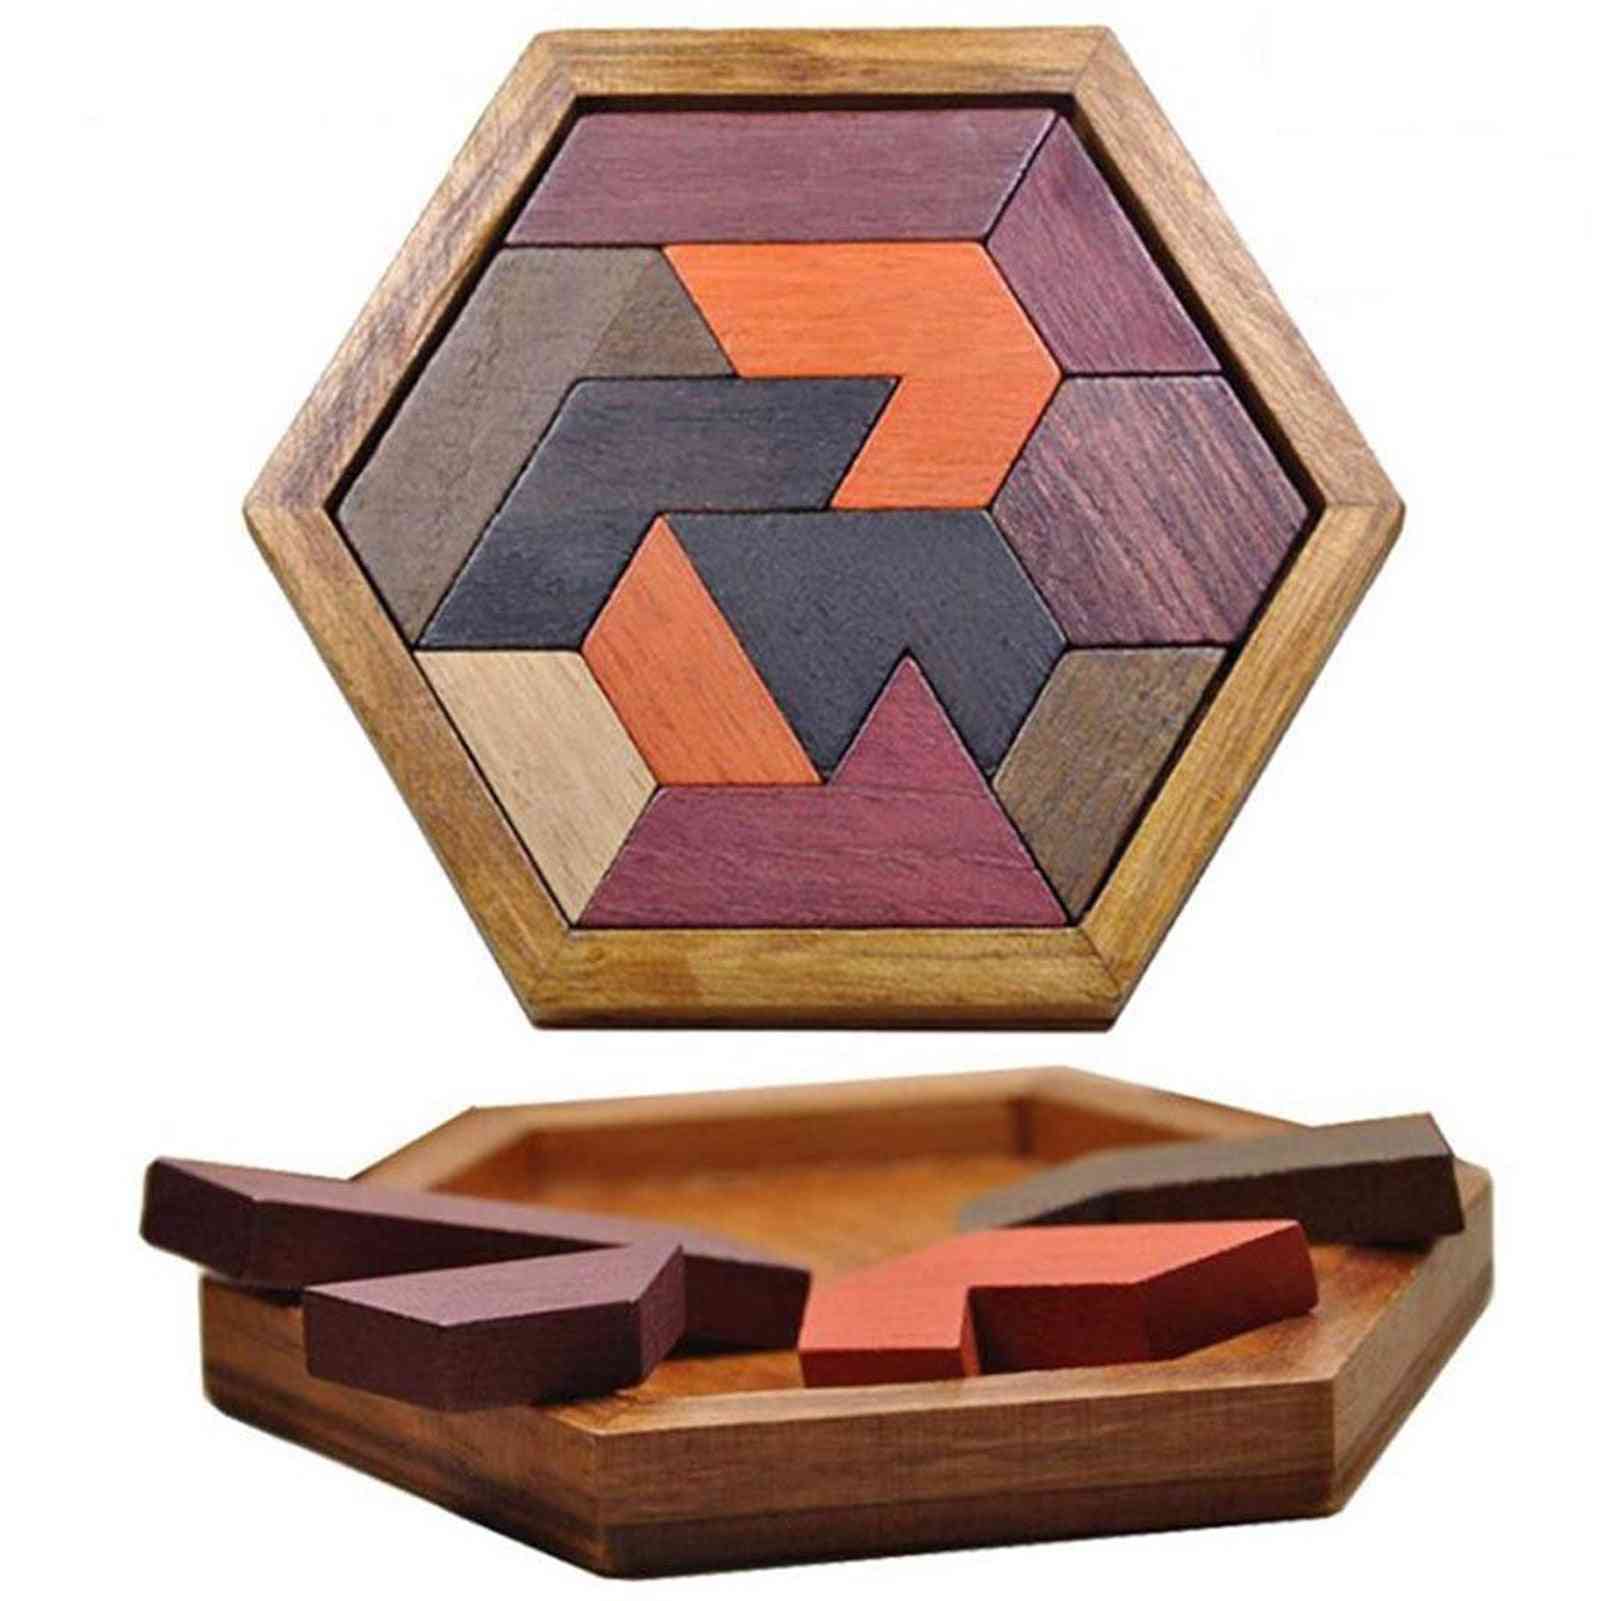 Hexagonal Wooden Geometric Shape Jigsaw Puzzles